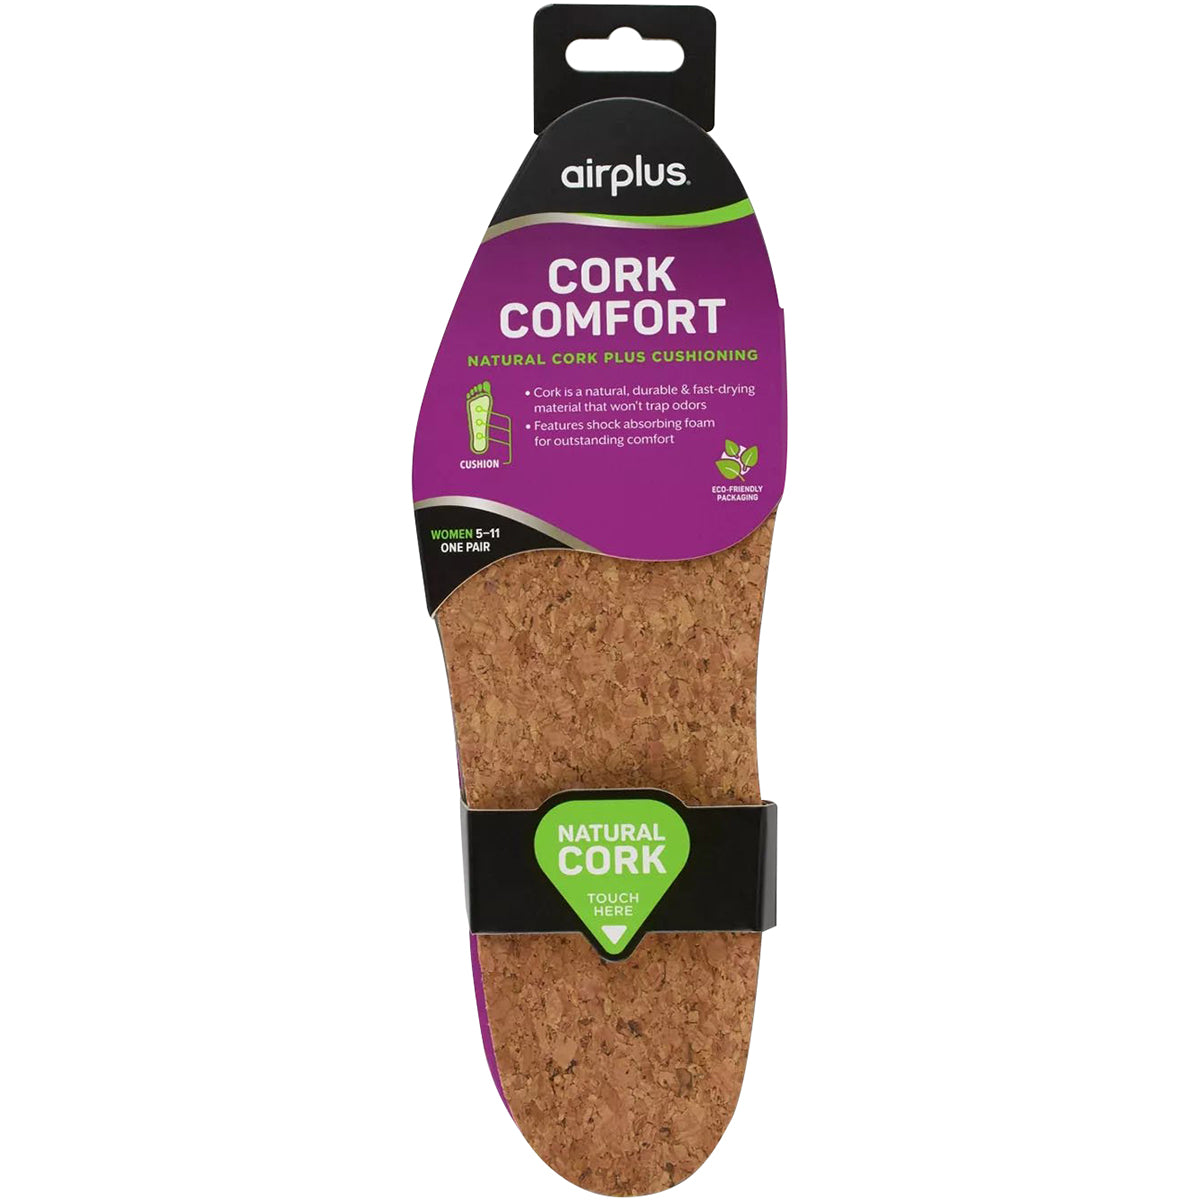 Airplus Cork Comfort Natural Cork Plus Cushioning Shoe Insoles Airplus